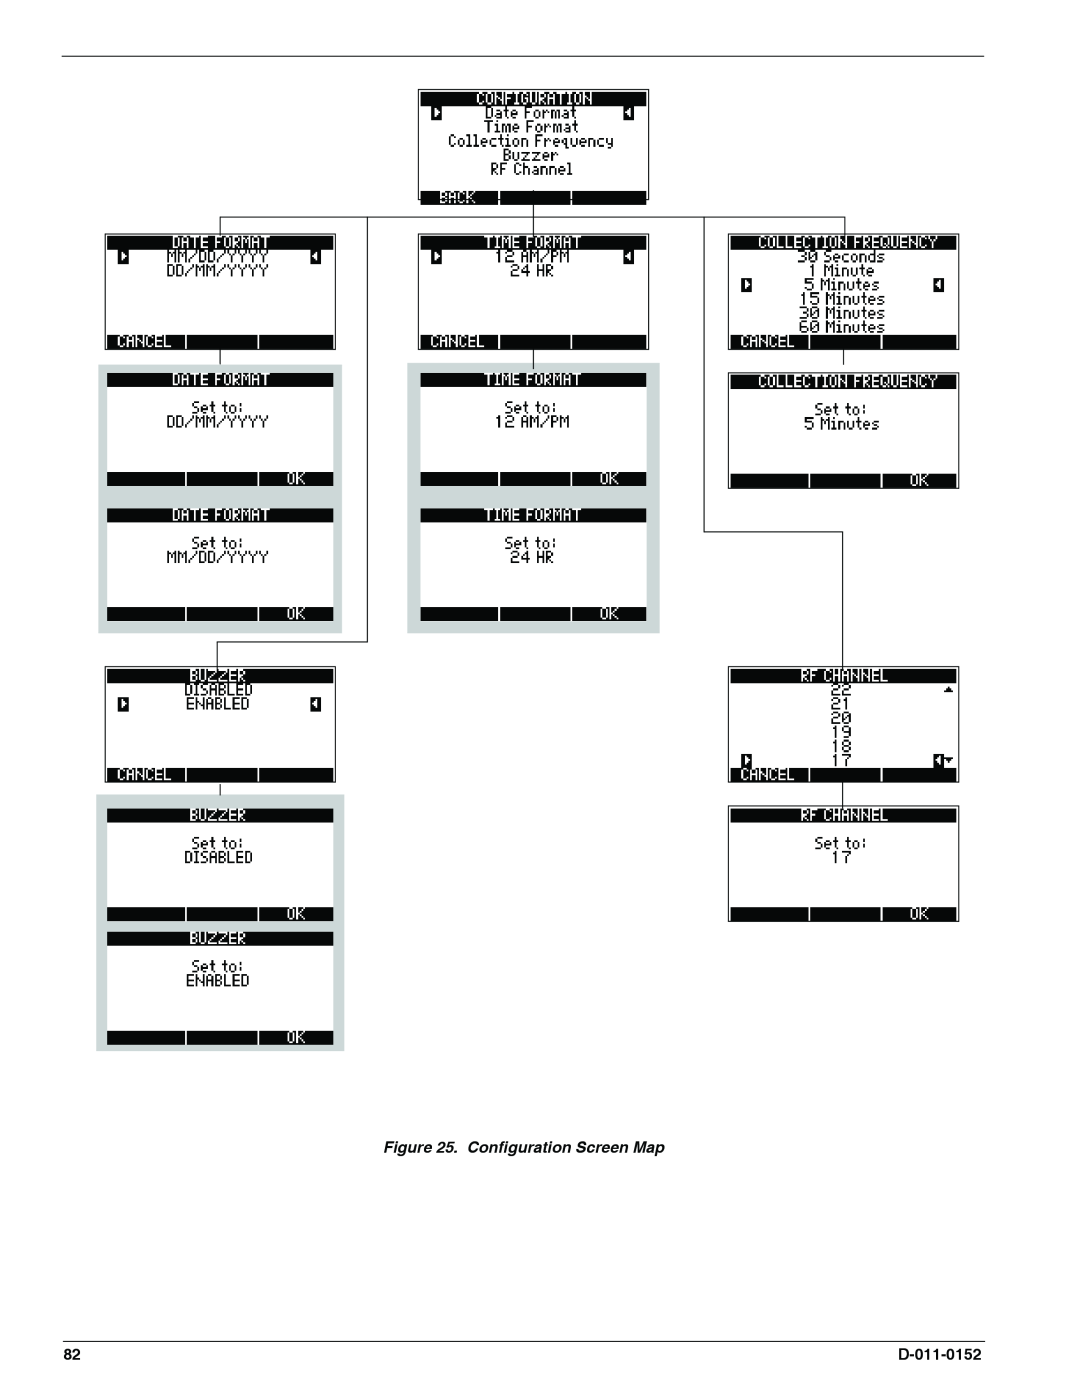 Enviro EA800 owner manual Configuration Screen Map, D-011-0152 